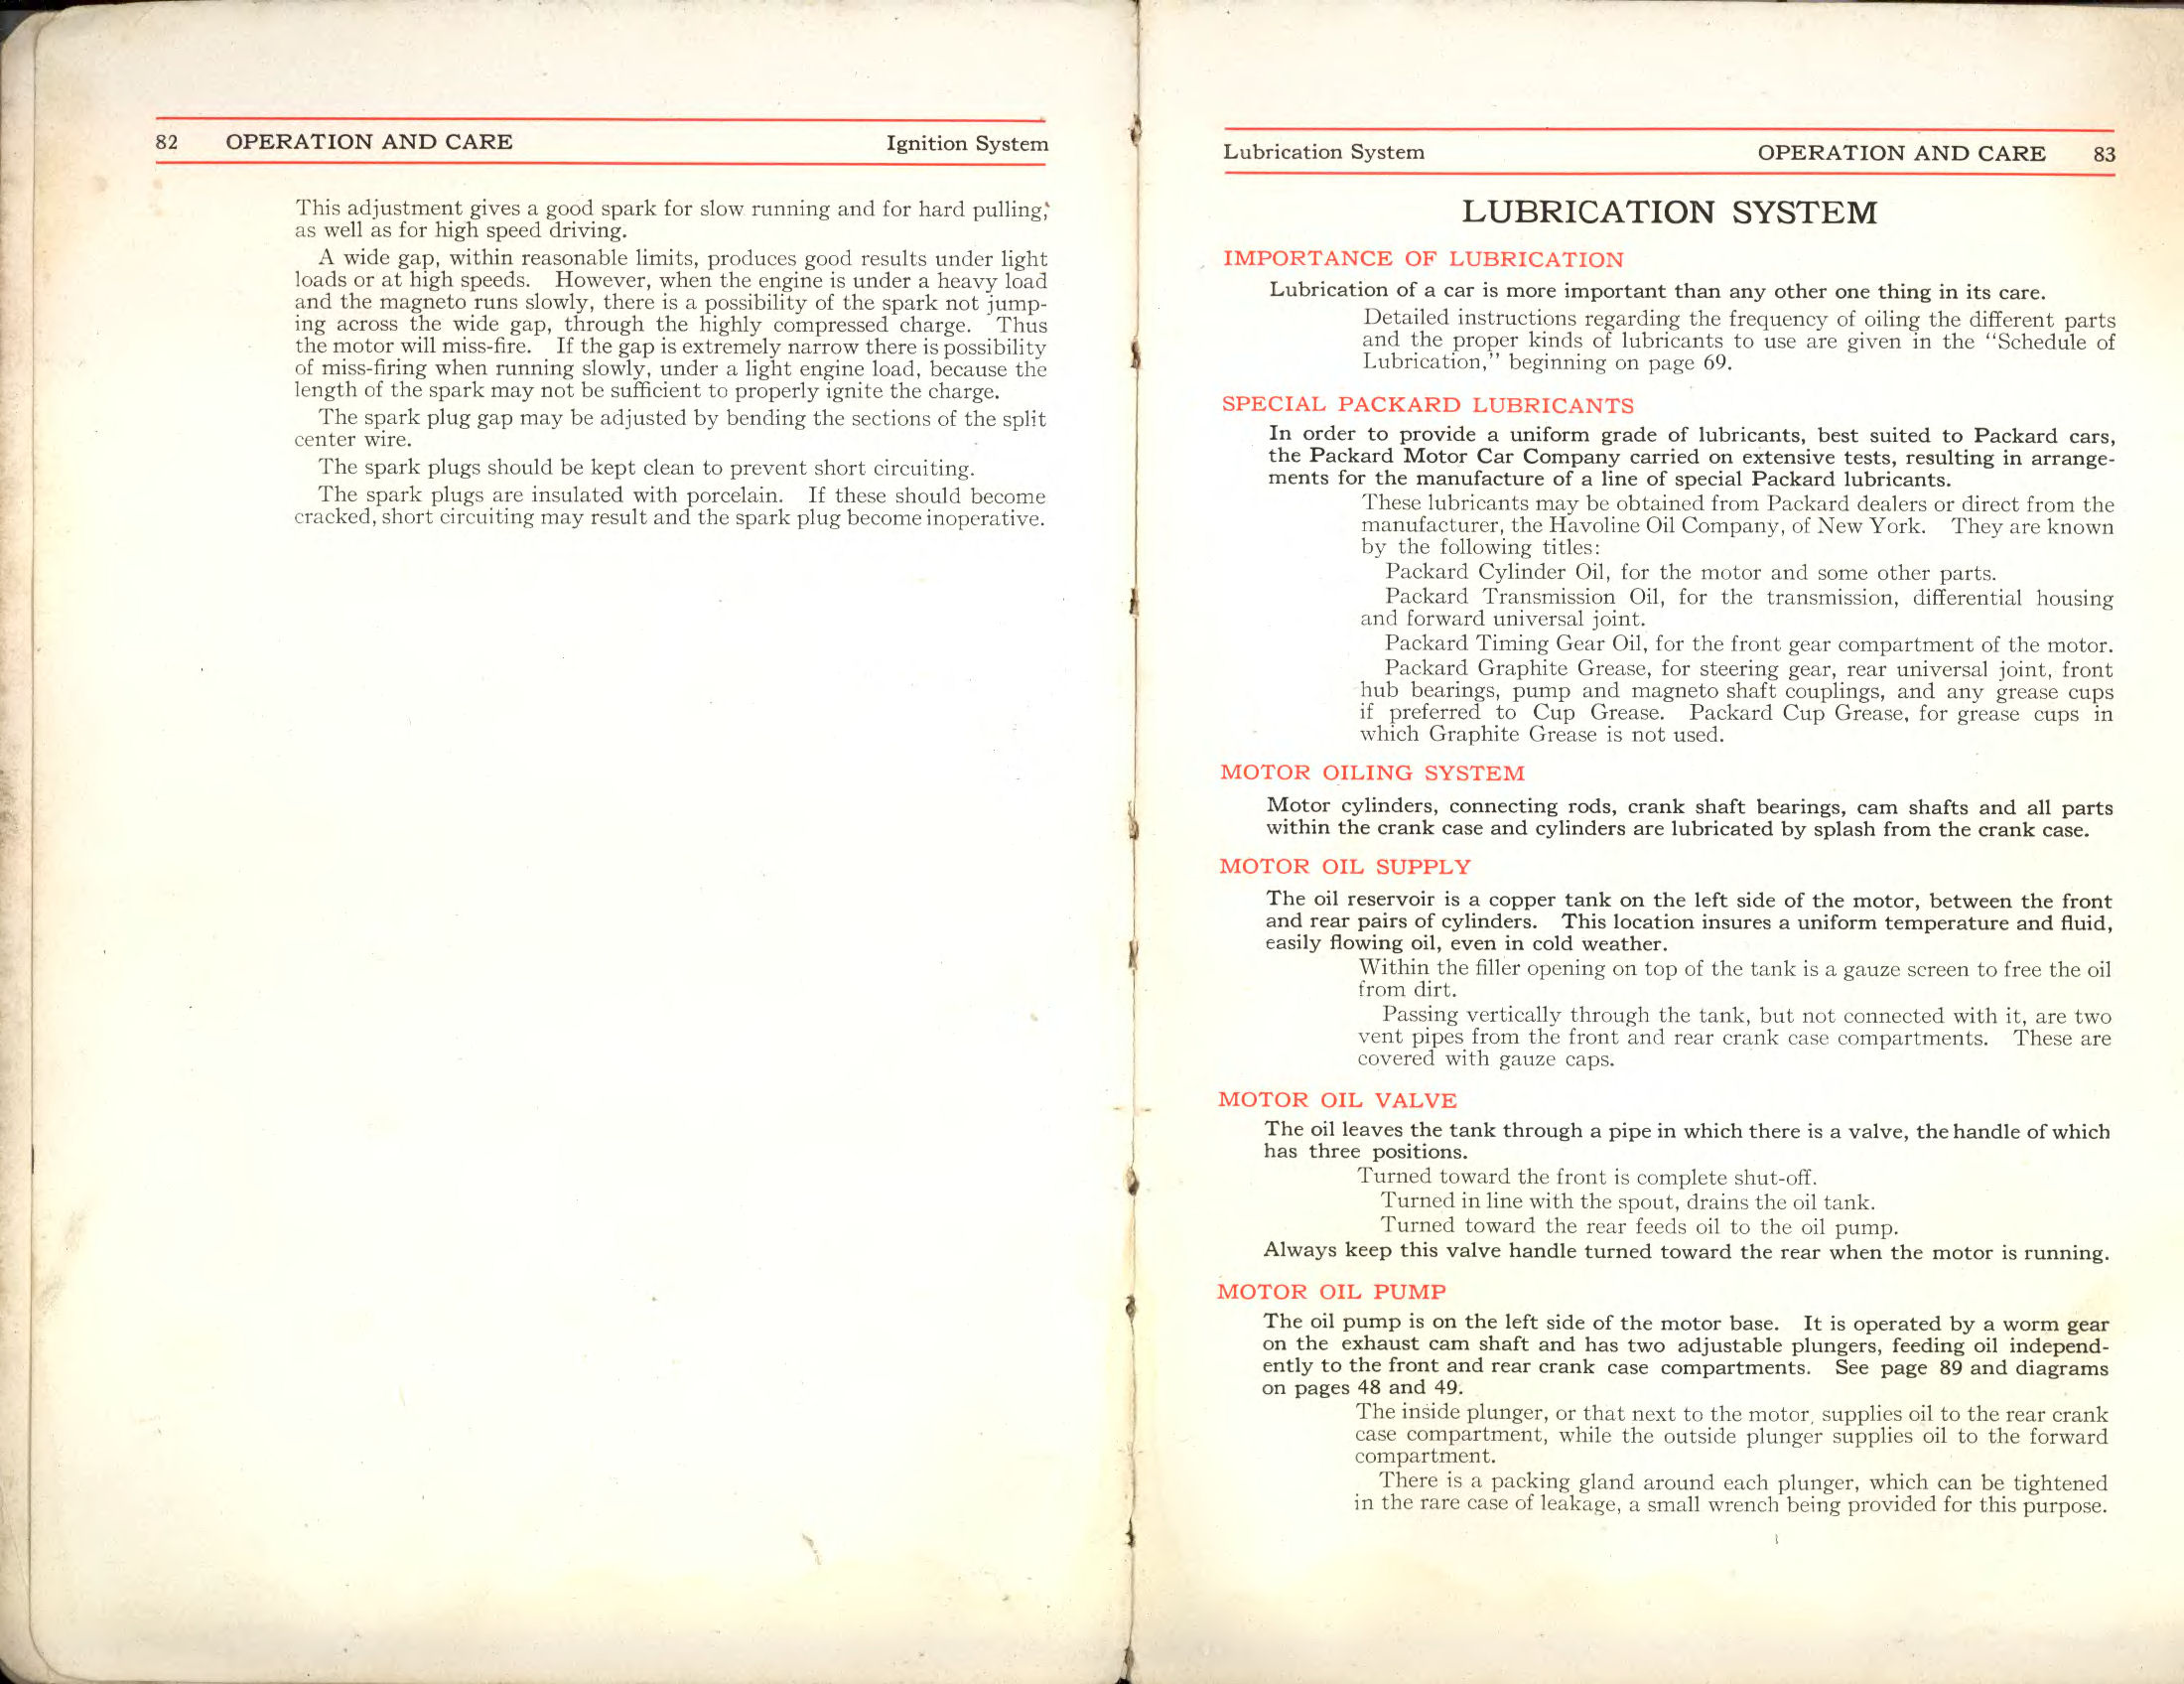 1911 Packard Manual-082-083